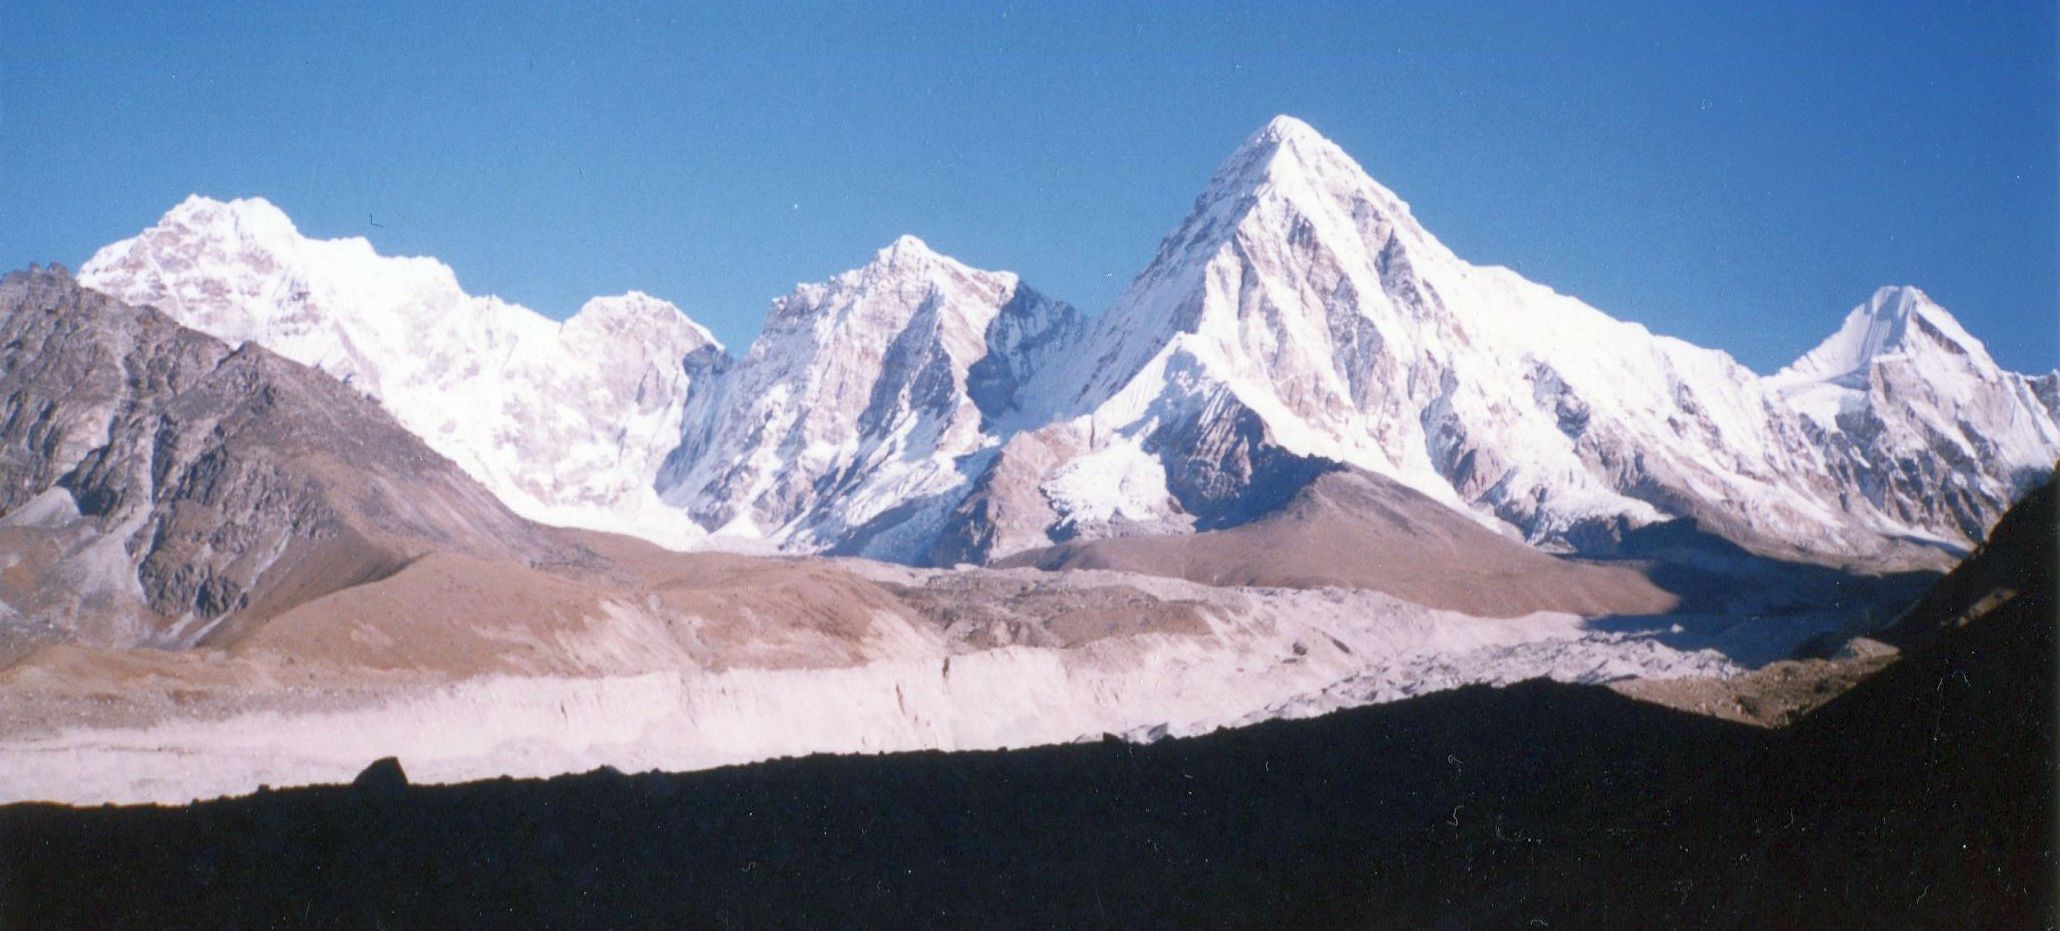 Mount Pumori ( 7161m ) above Kallar Pattar